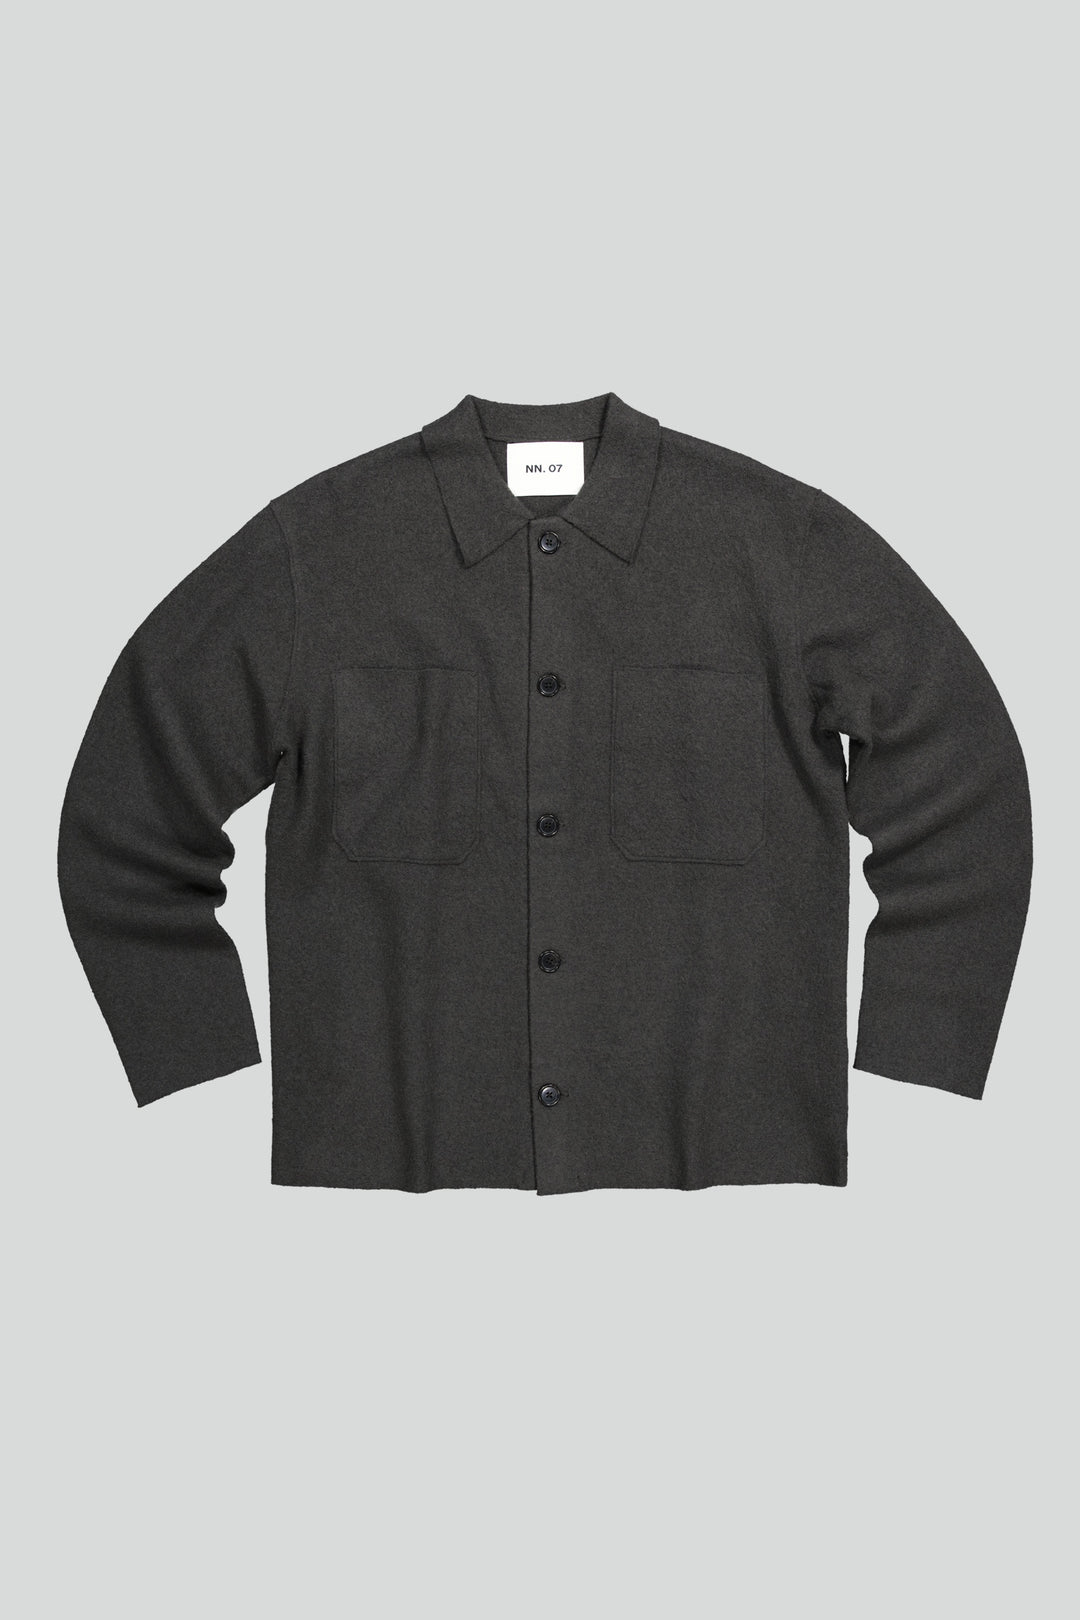 NN07 - Jonas 6398 Boiled Wool Shirt in Dark Army | Buster McGee